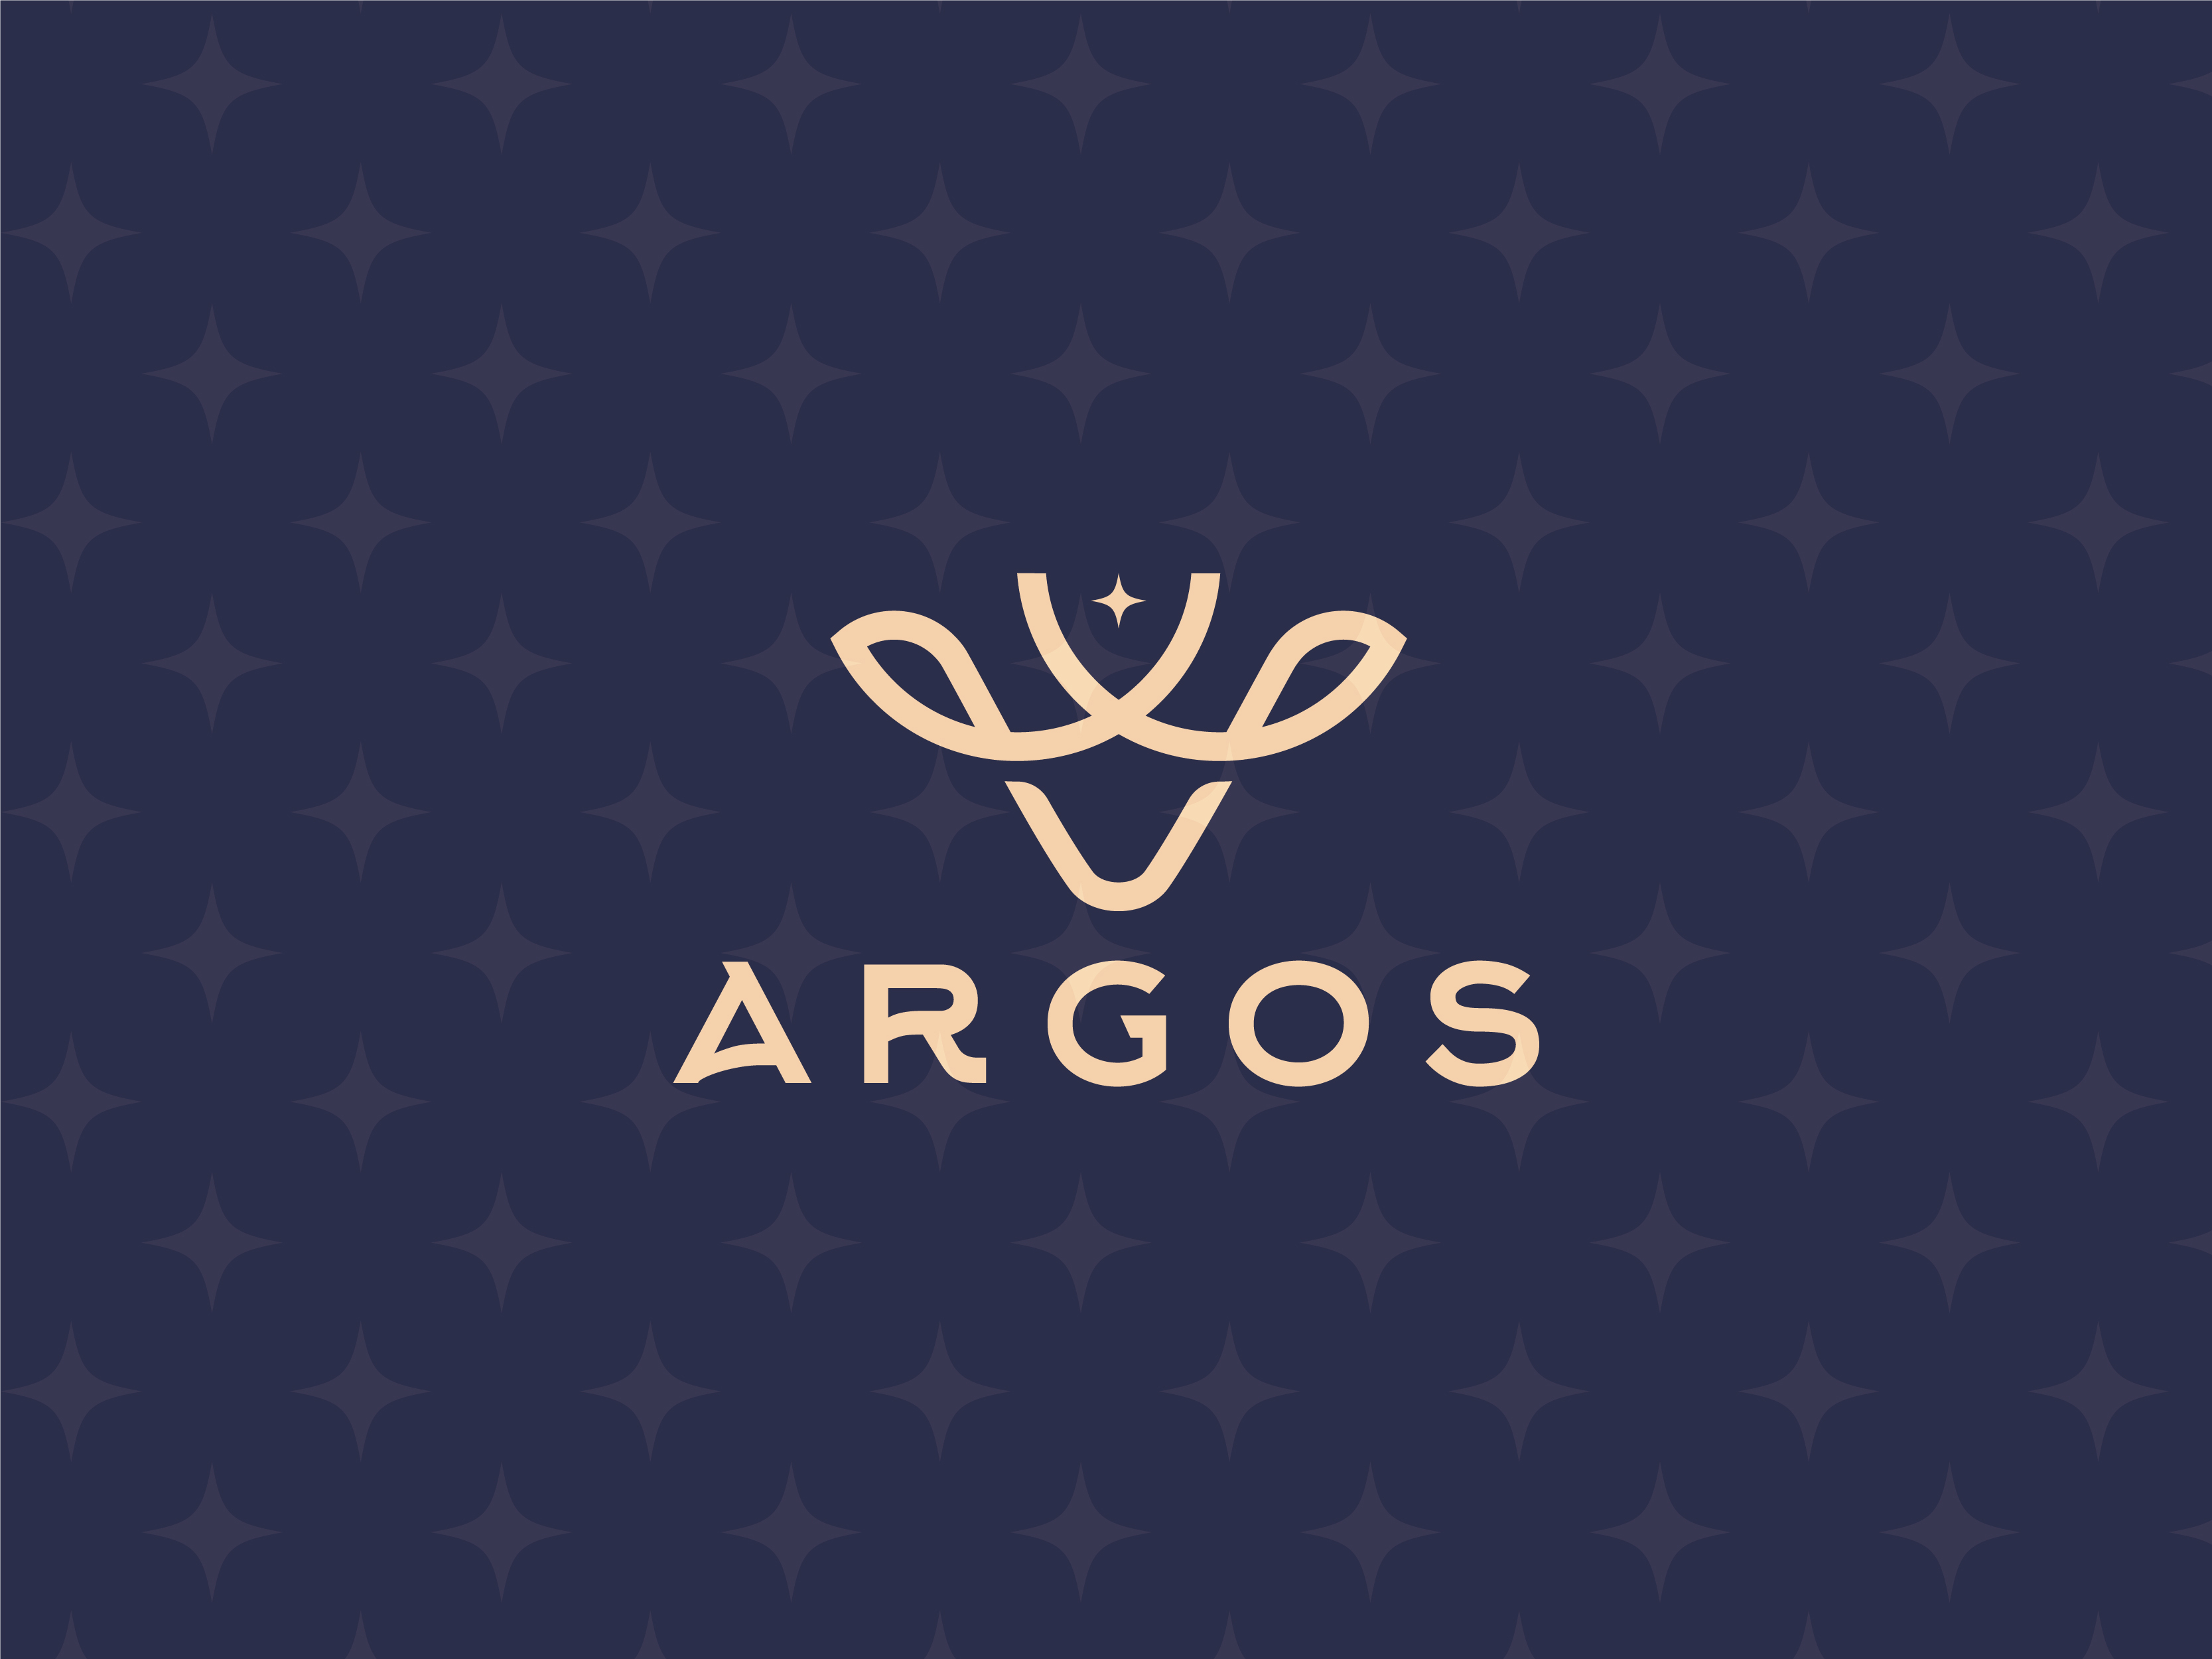 ARGOS LOGO DESIGN by designbyhelios on Dribbble